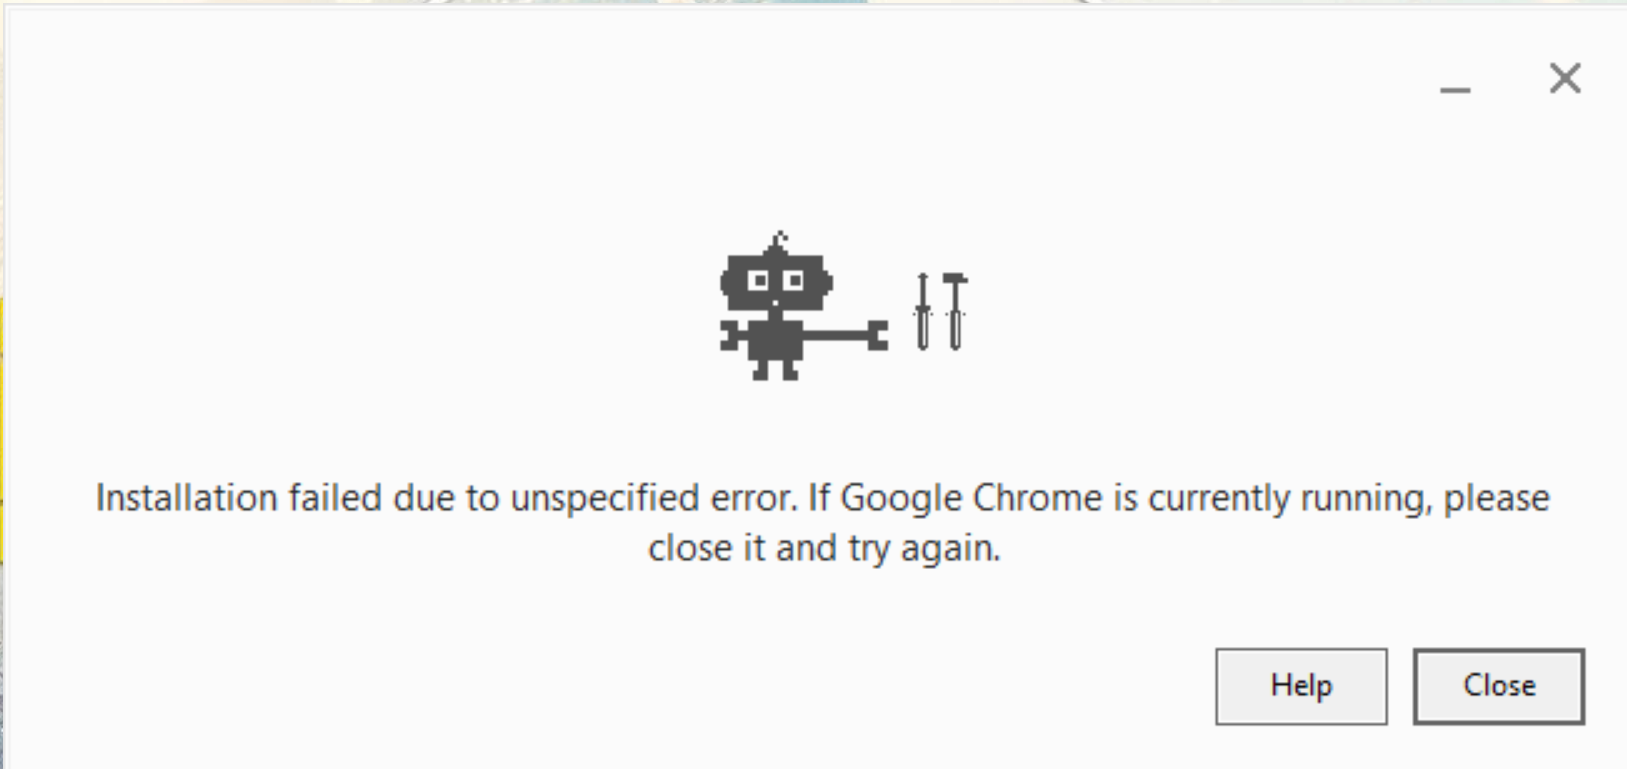 Please install the latest version. Error гугл хром. Ошибка Google Chrome. Google Chrome hata. Ошибка хром скачивания.